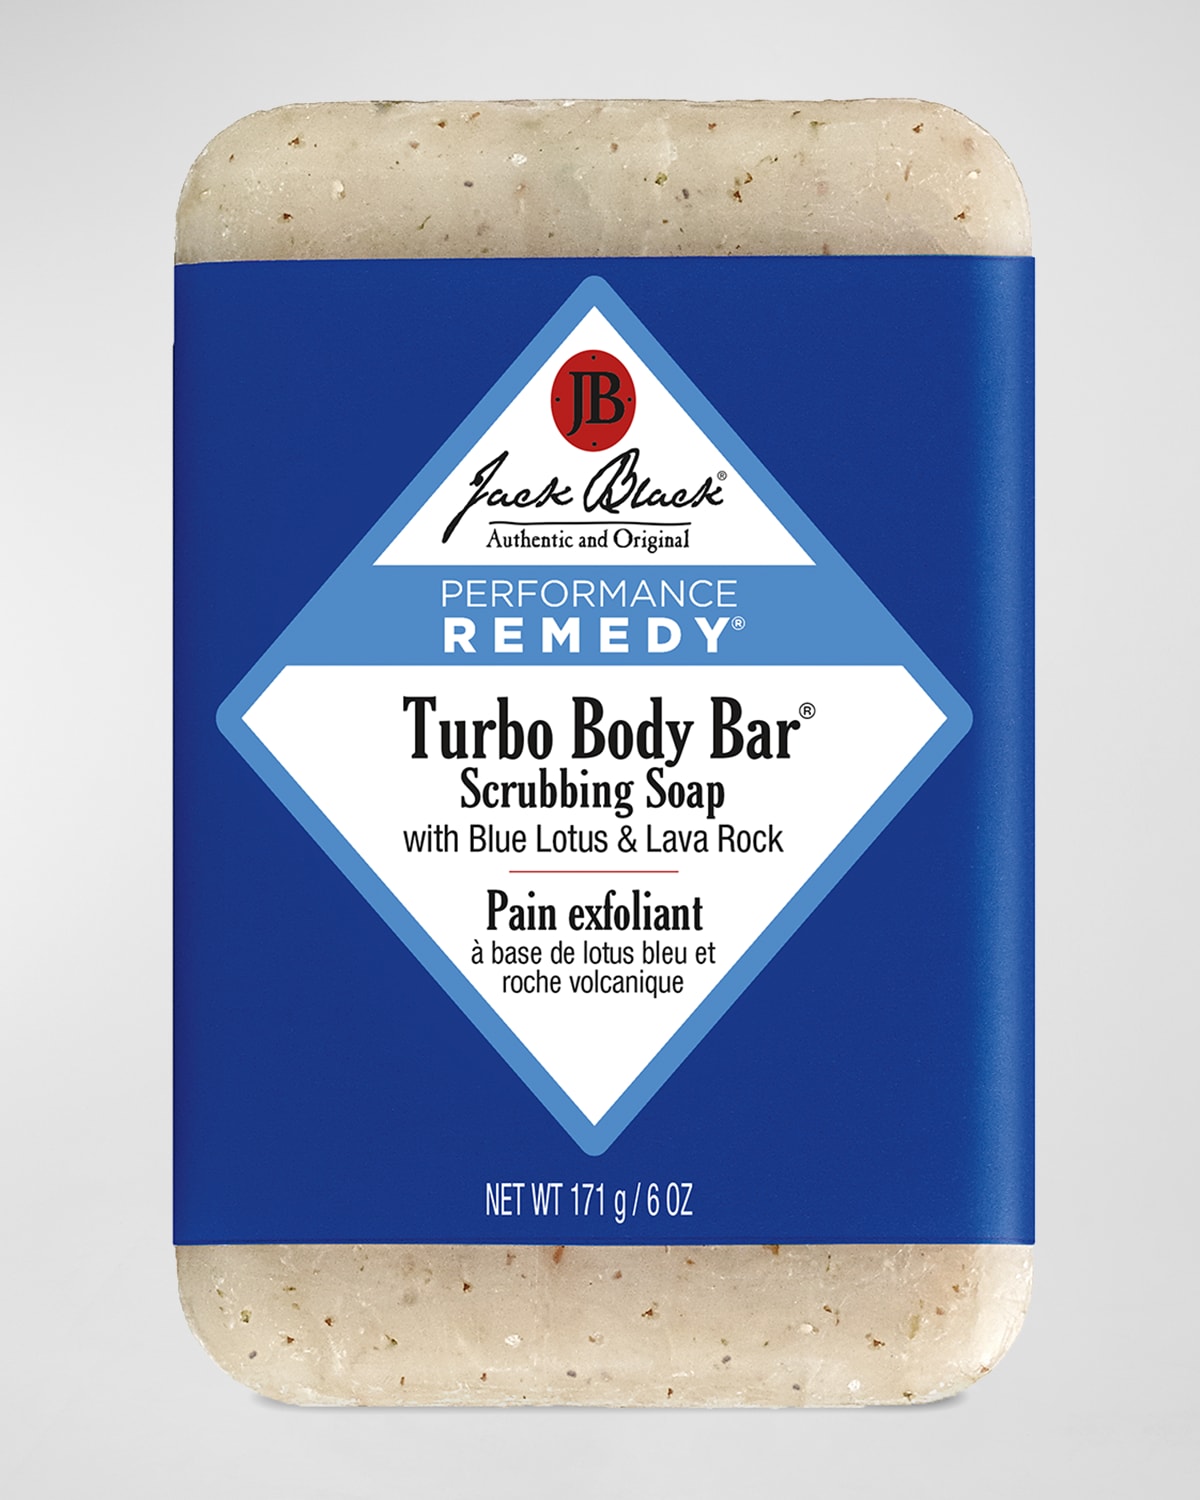 6 oz. Turbo Body Bar Scrubbing Soap